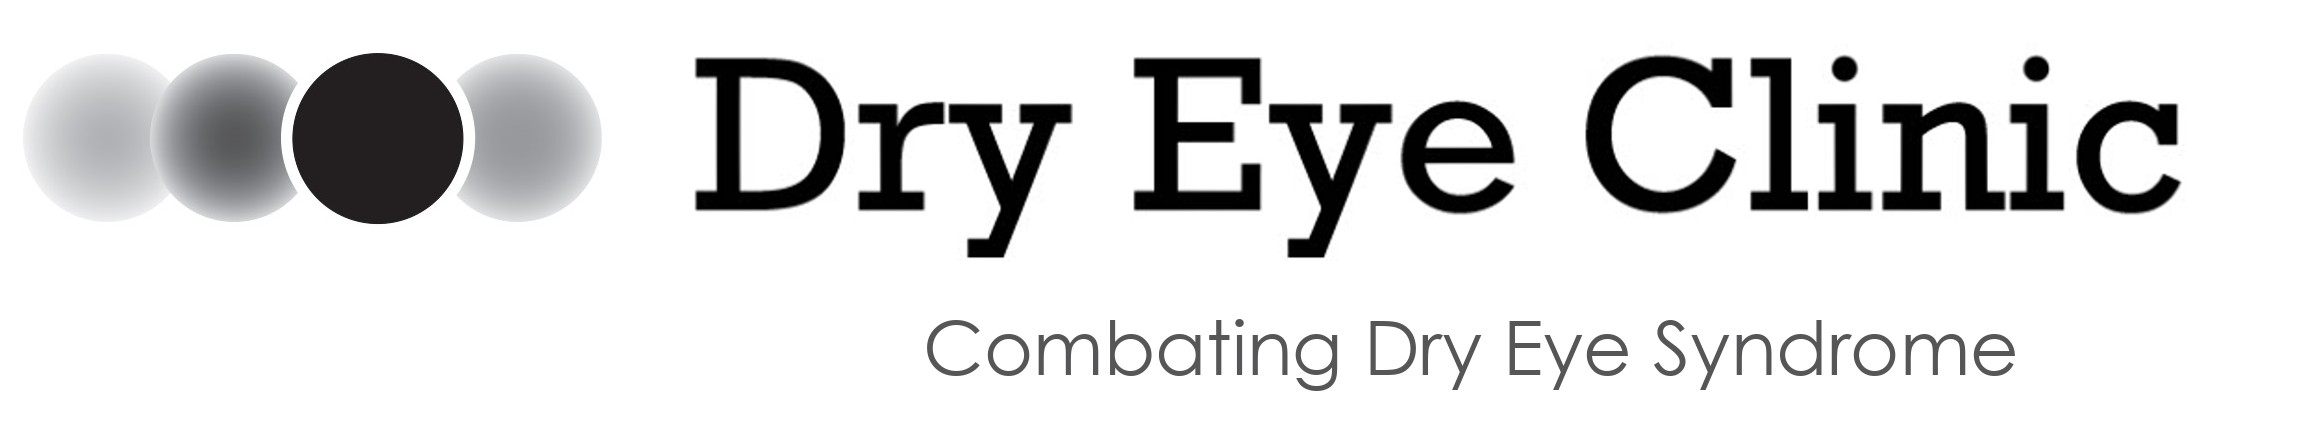 Dry Eye Clinic